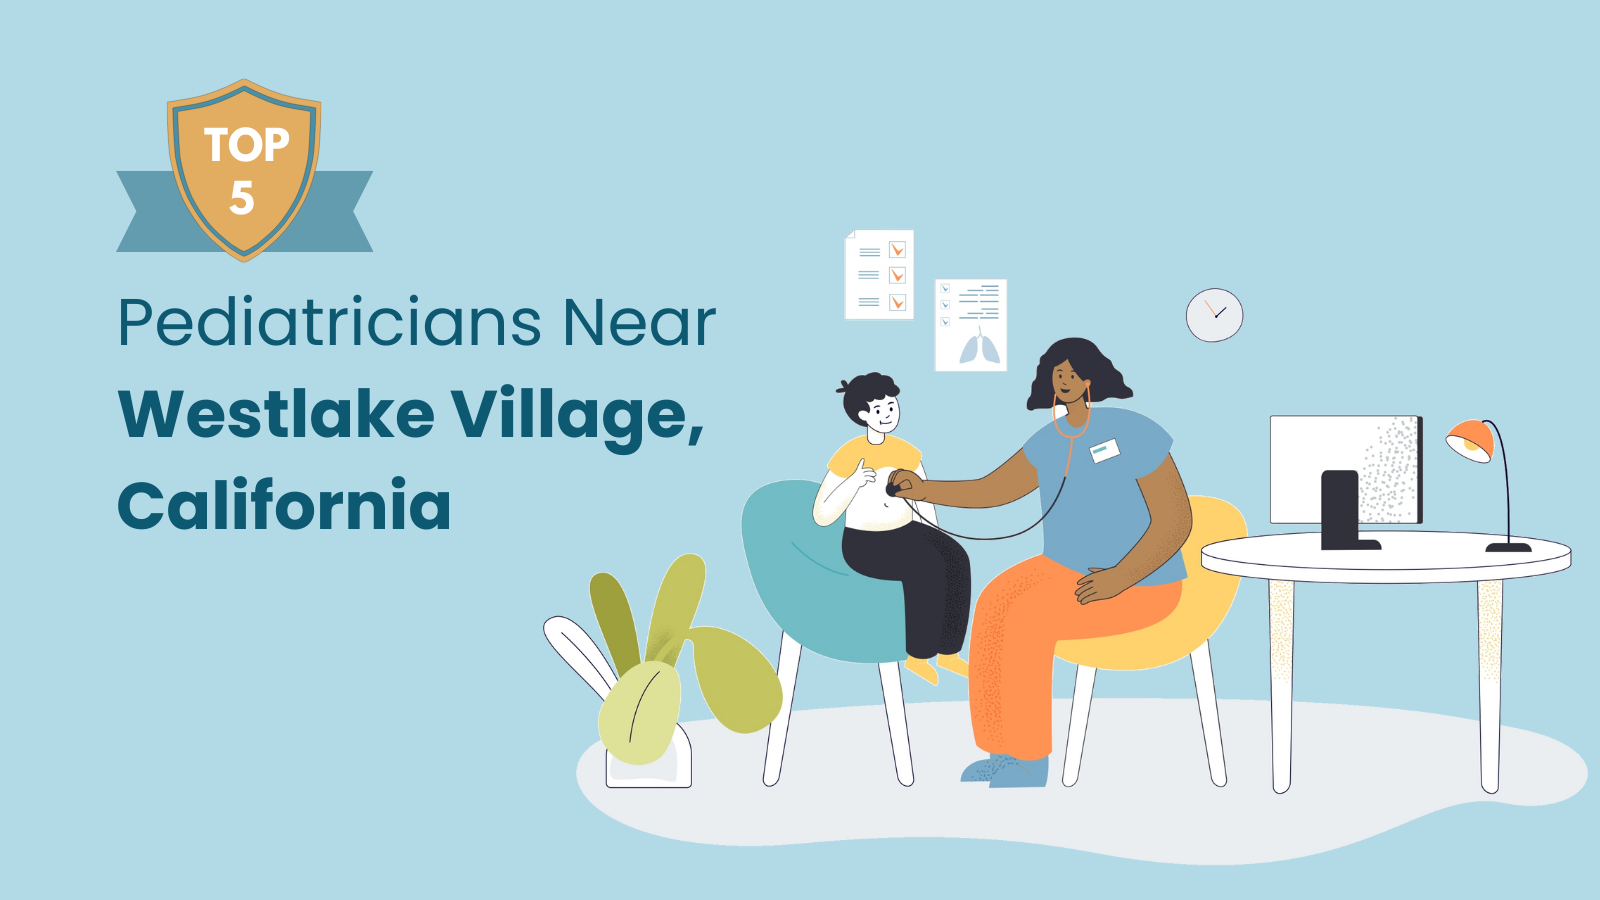 Top-Rated Pediatricians Near Westlake Village, California